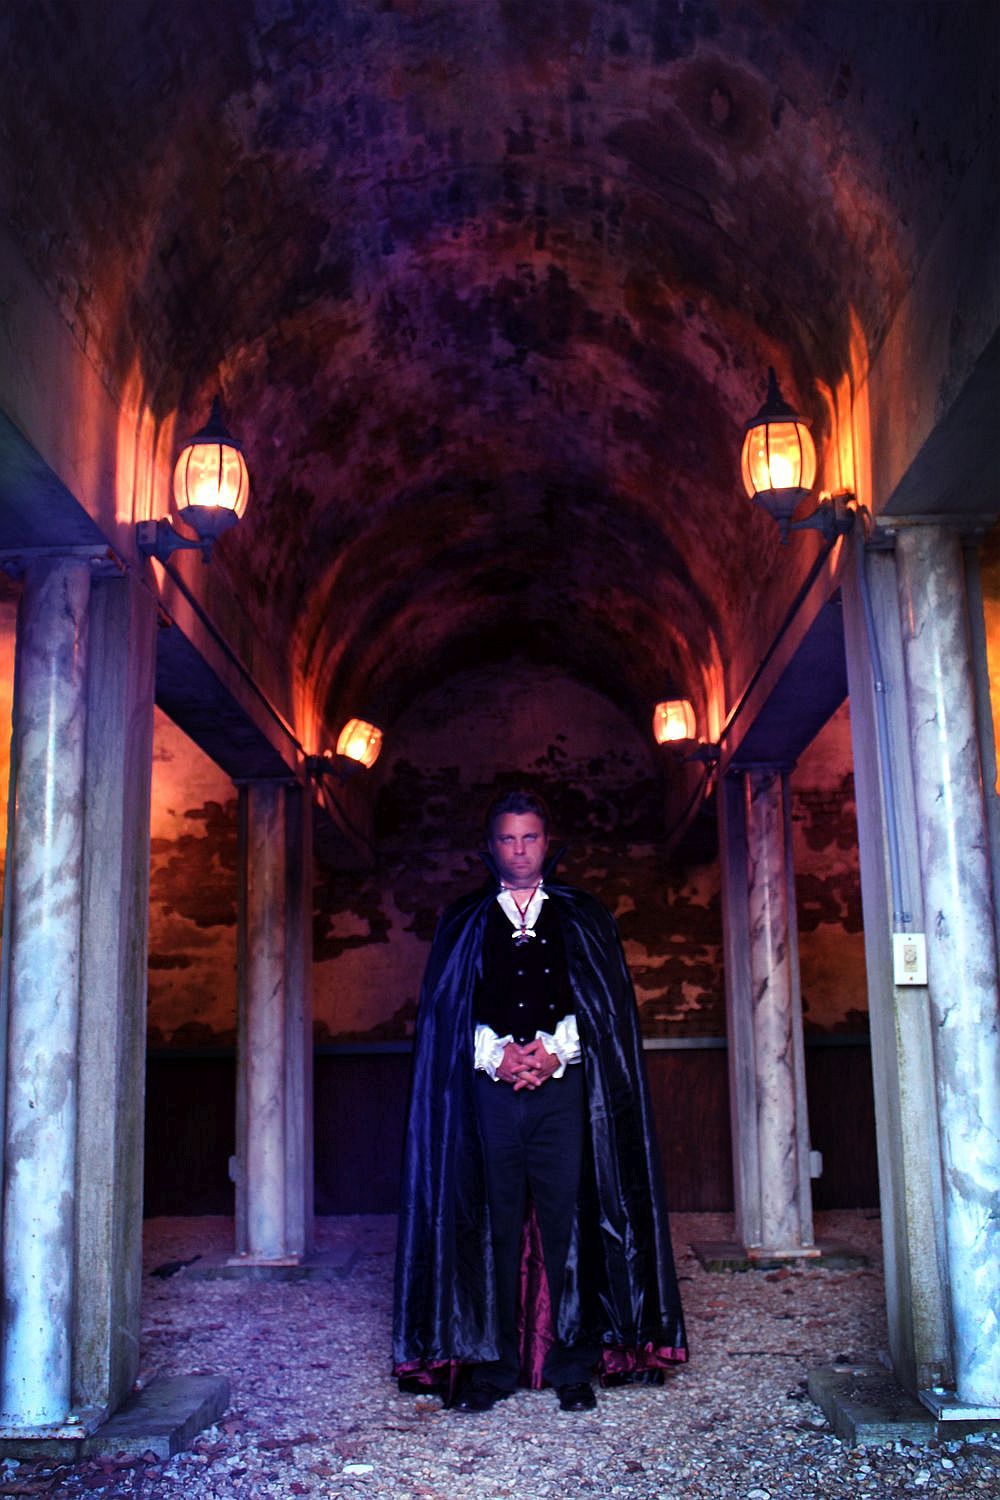 Drac Von Stoller photo taken at the cemetery in a crypt